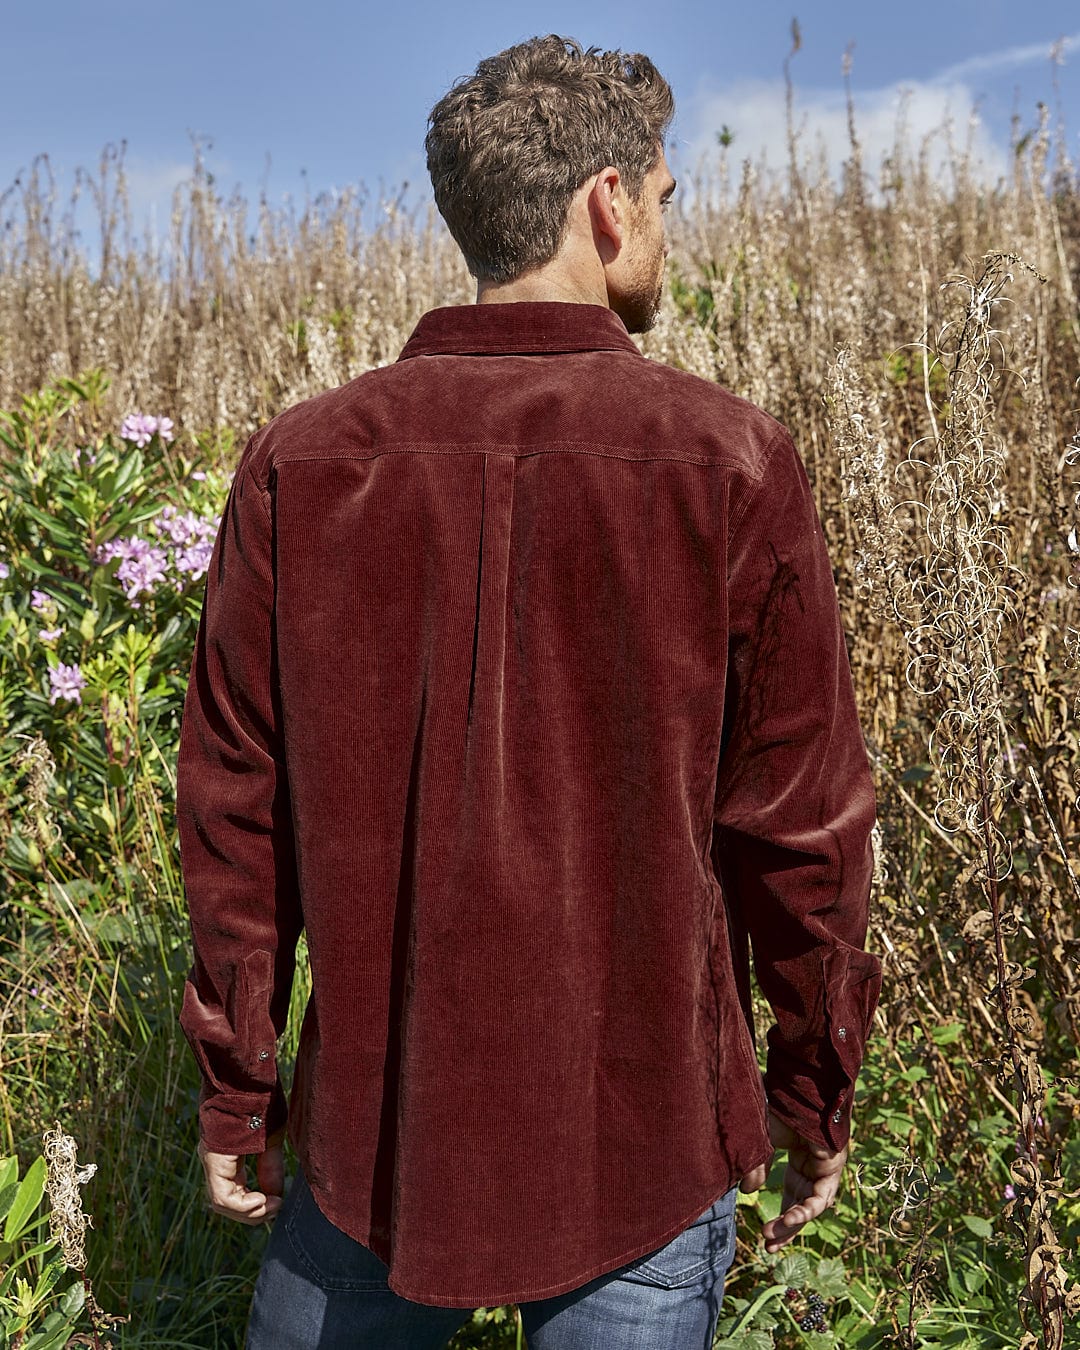 A man is standing in a field wearing a Saltrock Linus - Mens Long Sleeve Shirt - Dark Red.